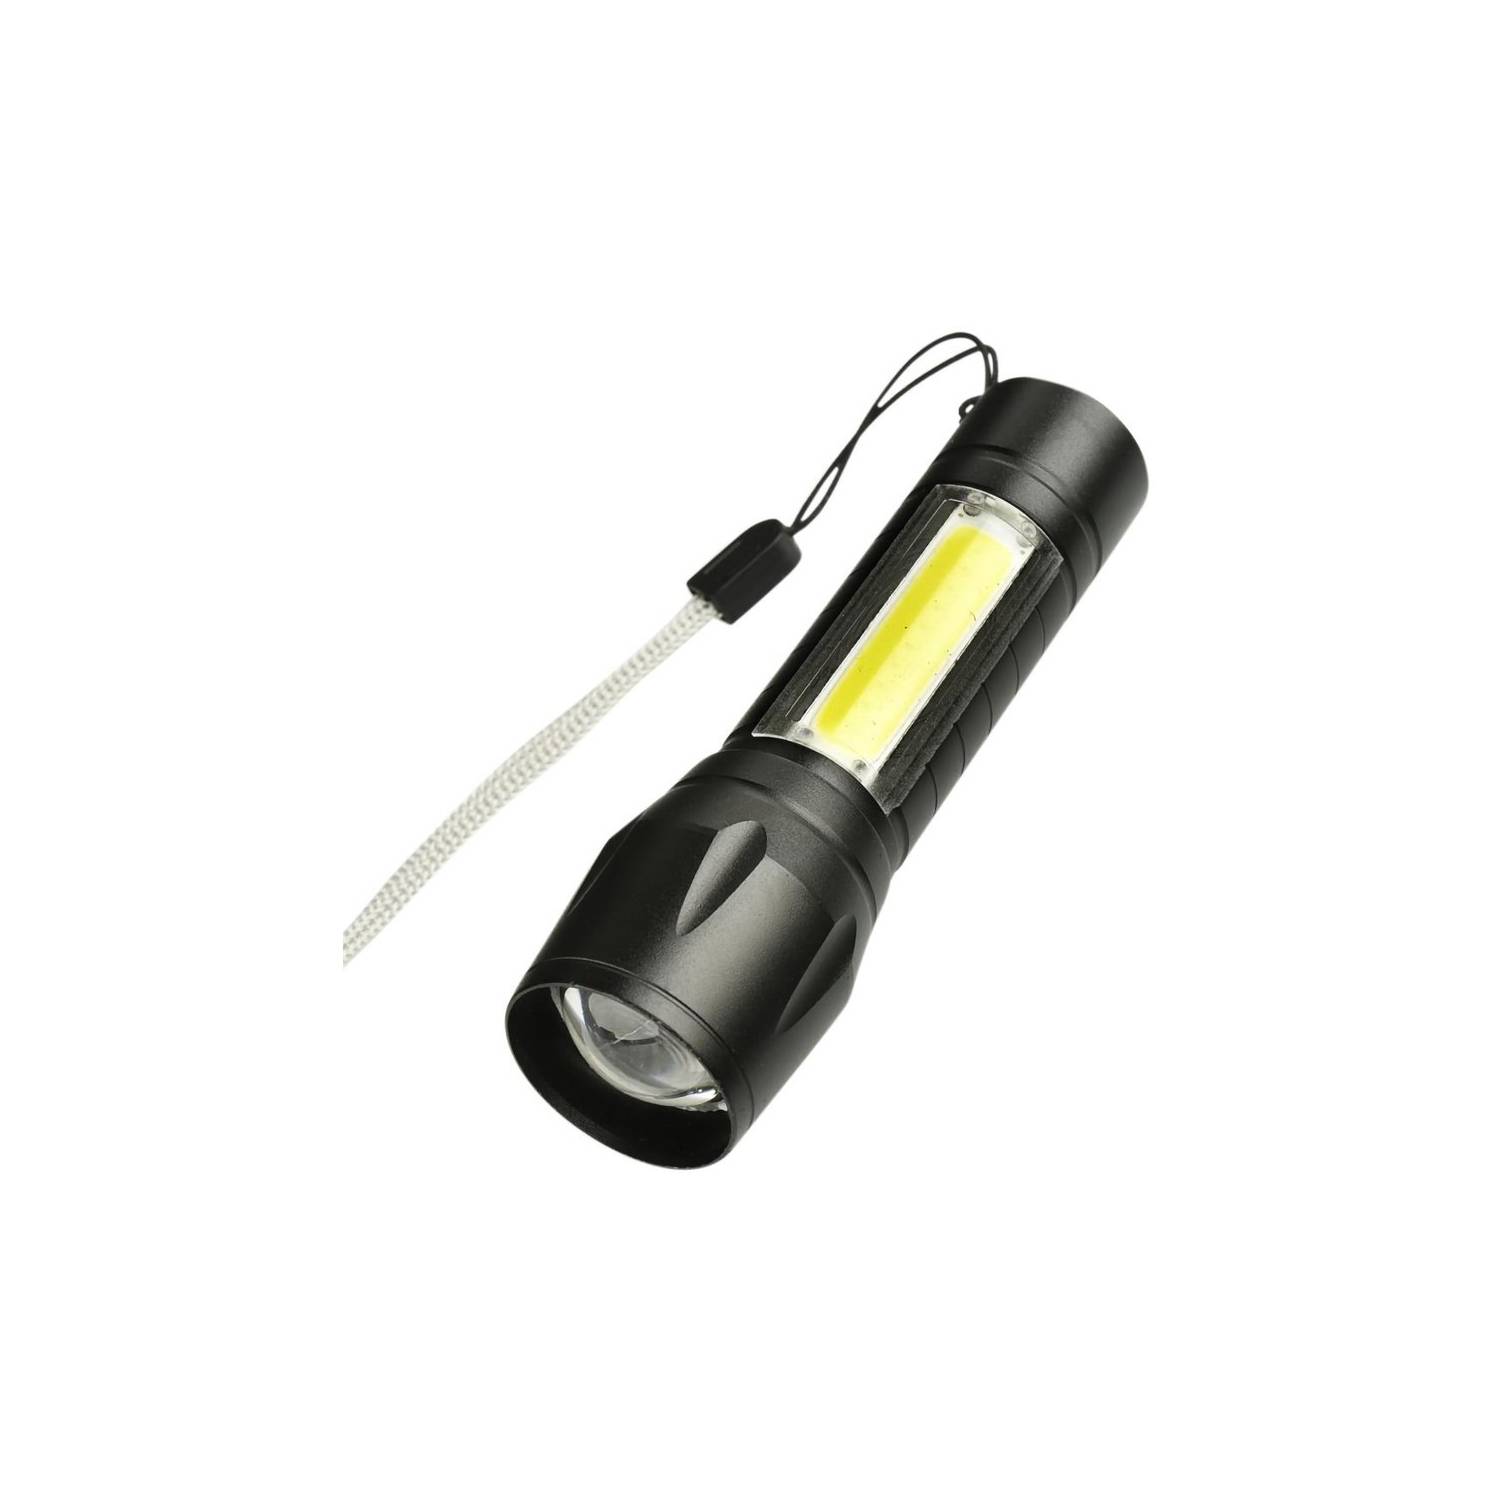 Linterna USB, linterna pequeña Mini linterna recargable USB